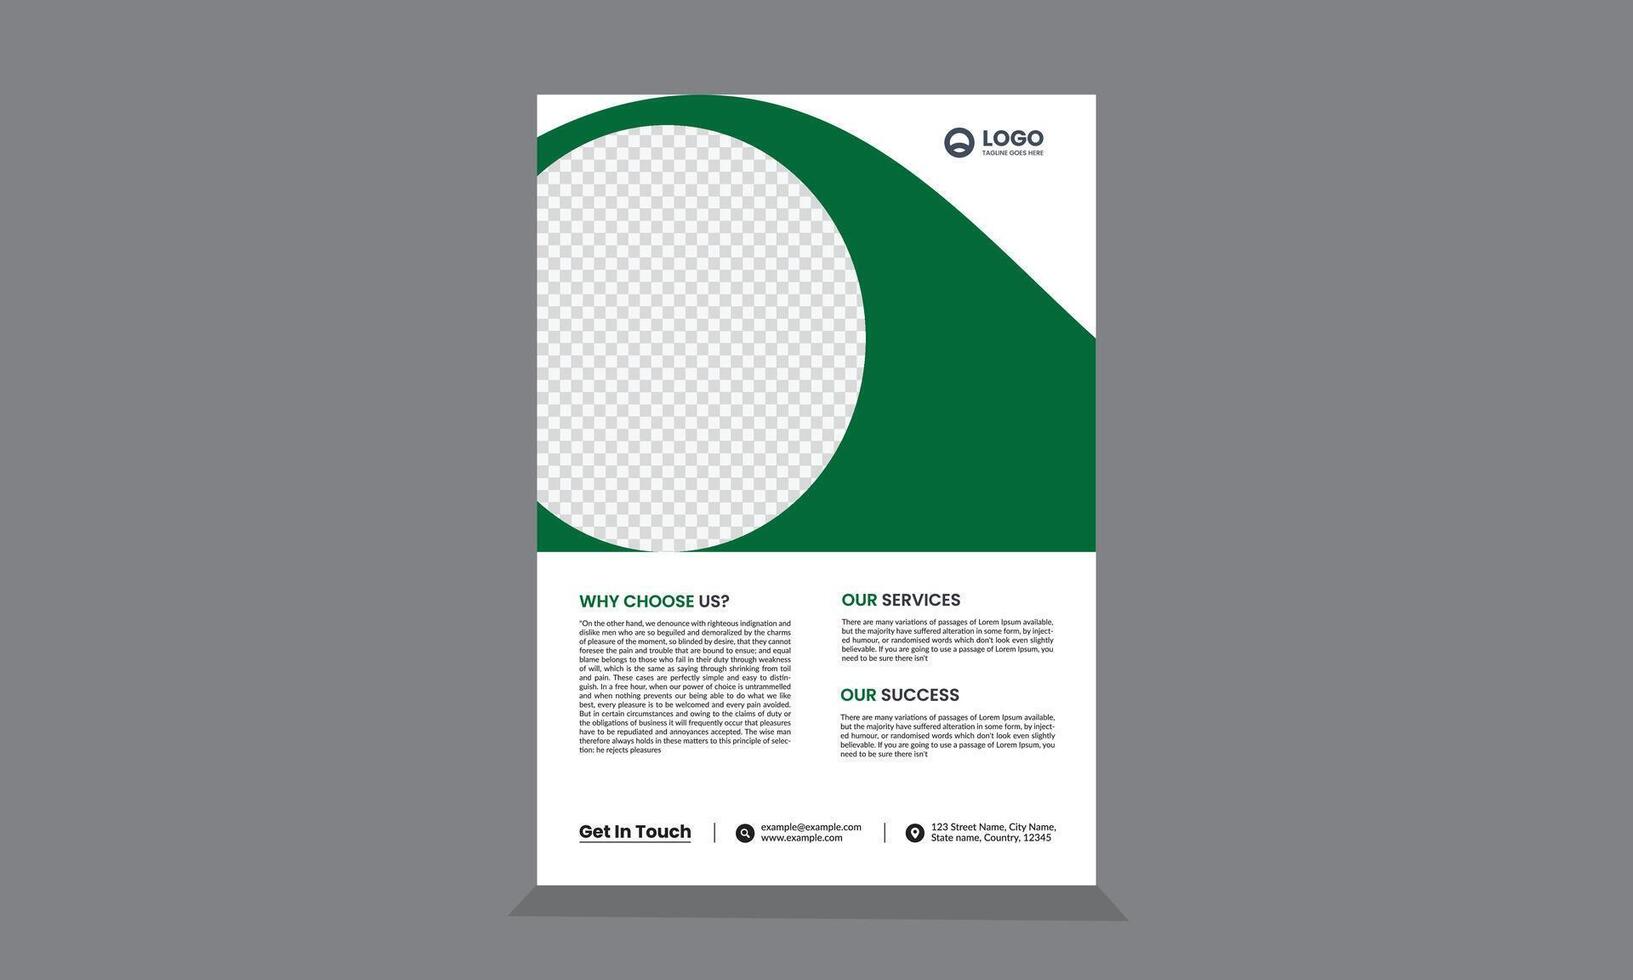 poster folder brochure brochure Hoes ontwerp lay-out ruimte voor foto achtergrond, sjabloon in a4 grootte vector